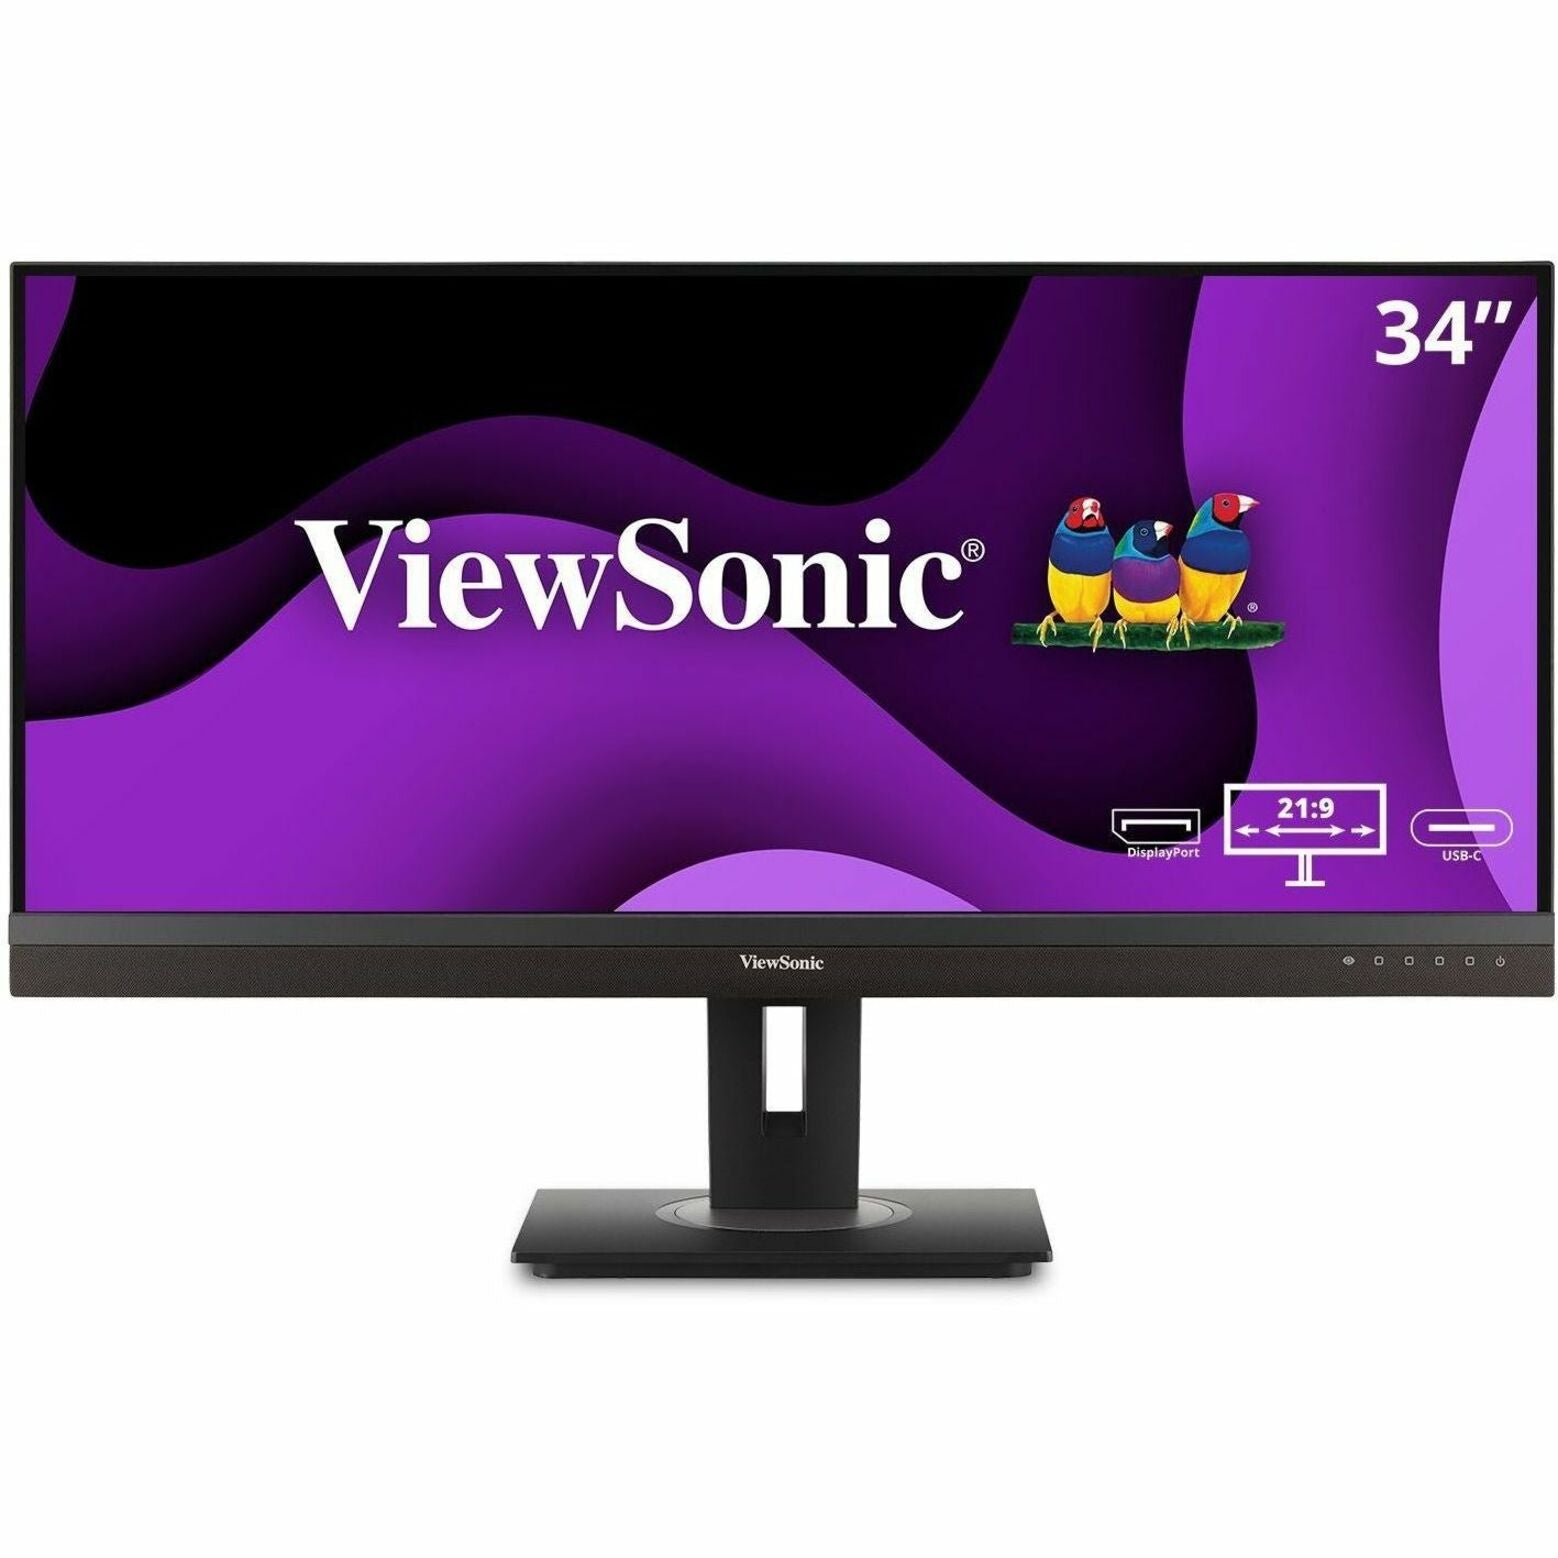 ViewSonic VG3456A 34" IPS LCD WQHD Monitor (HDMI, DP, and USB-C), 300 Nit Brightness, 16.7 Million Colors